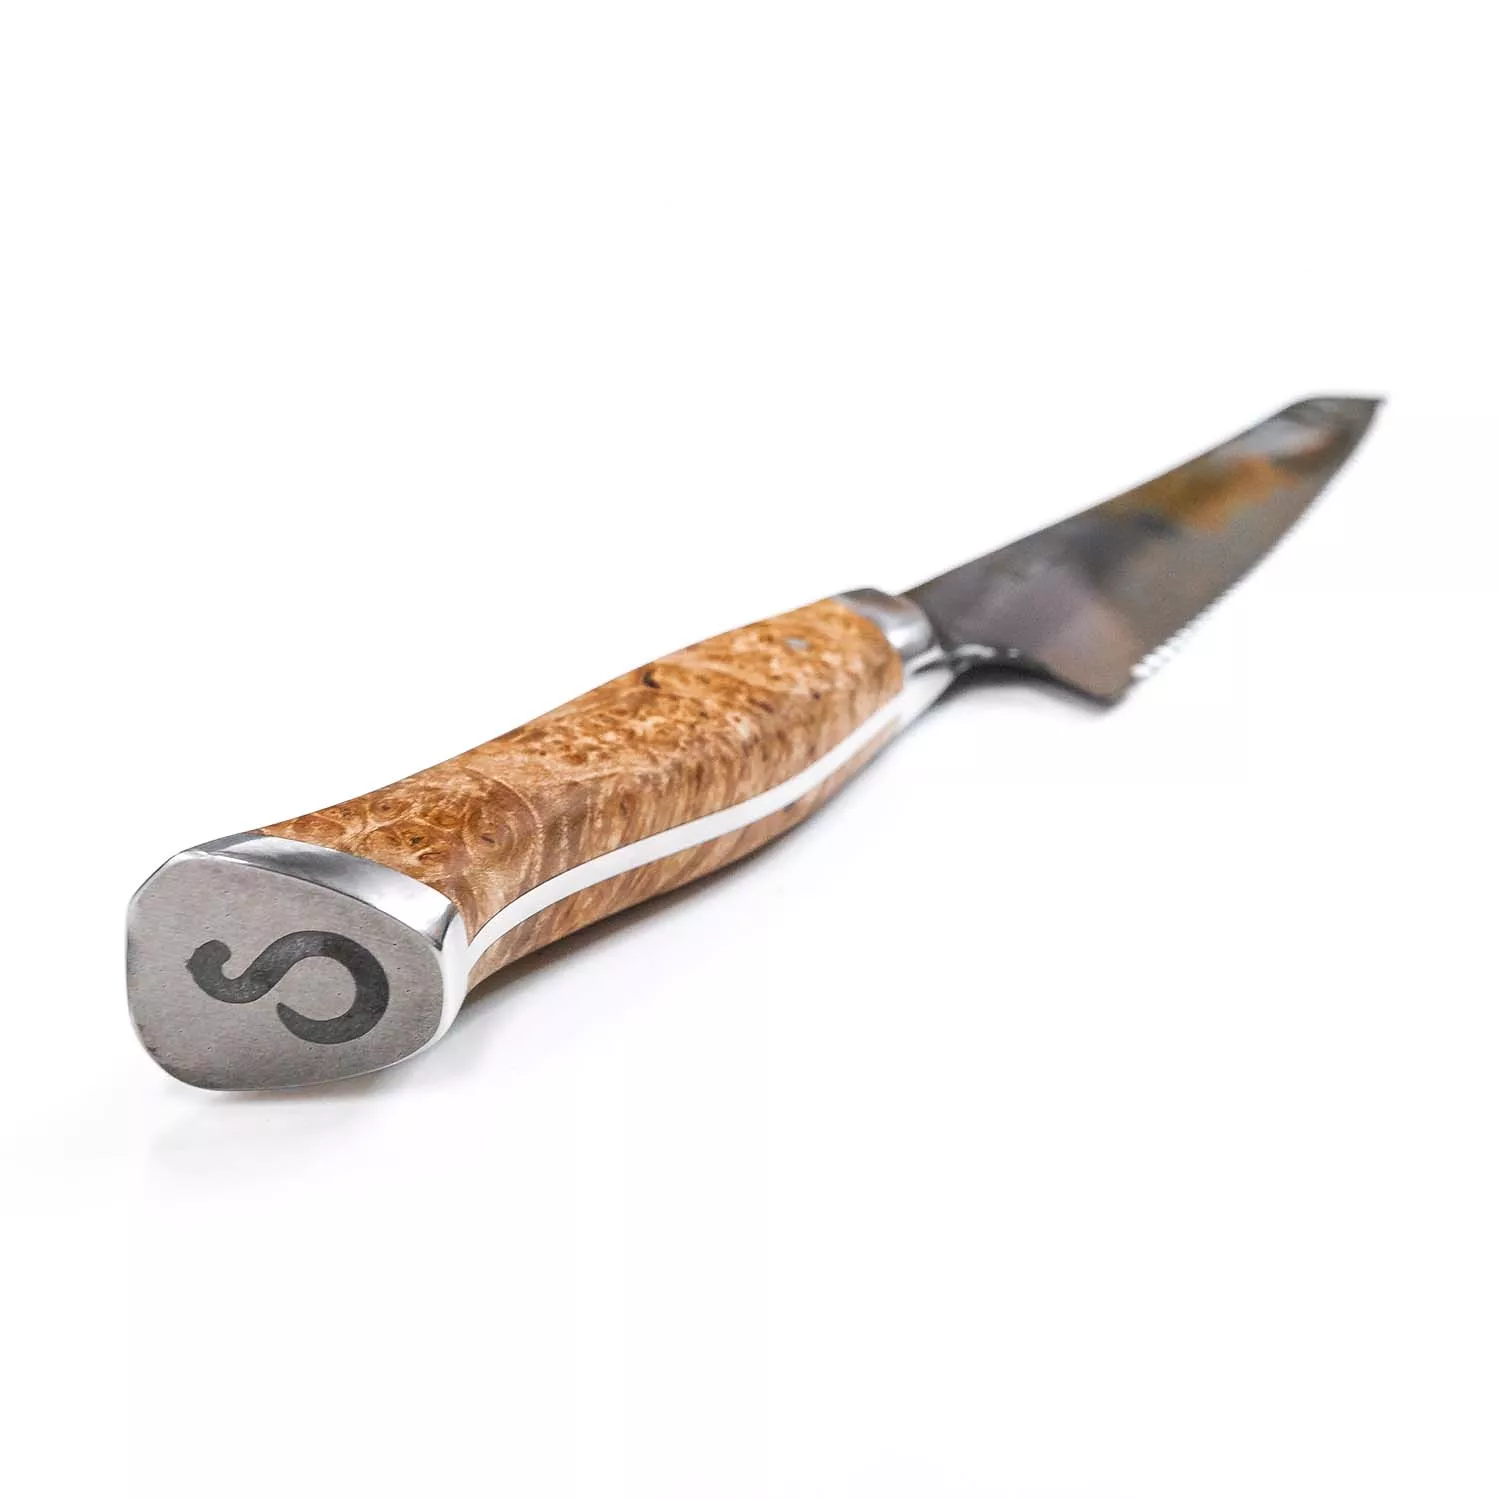 6 Boning Knife - STEELPORT Knife Co.